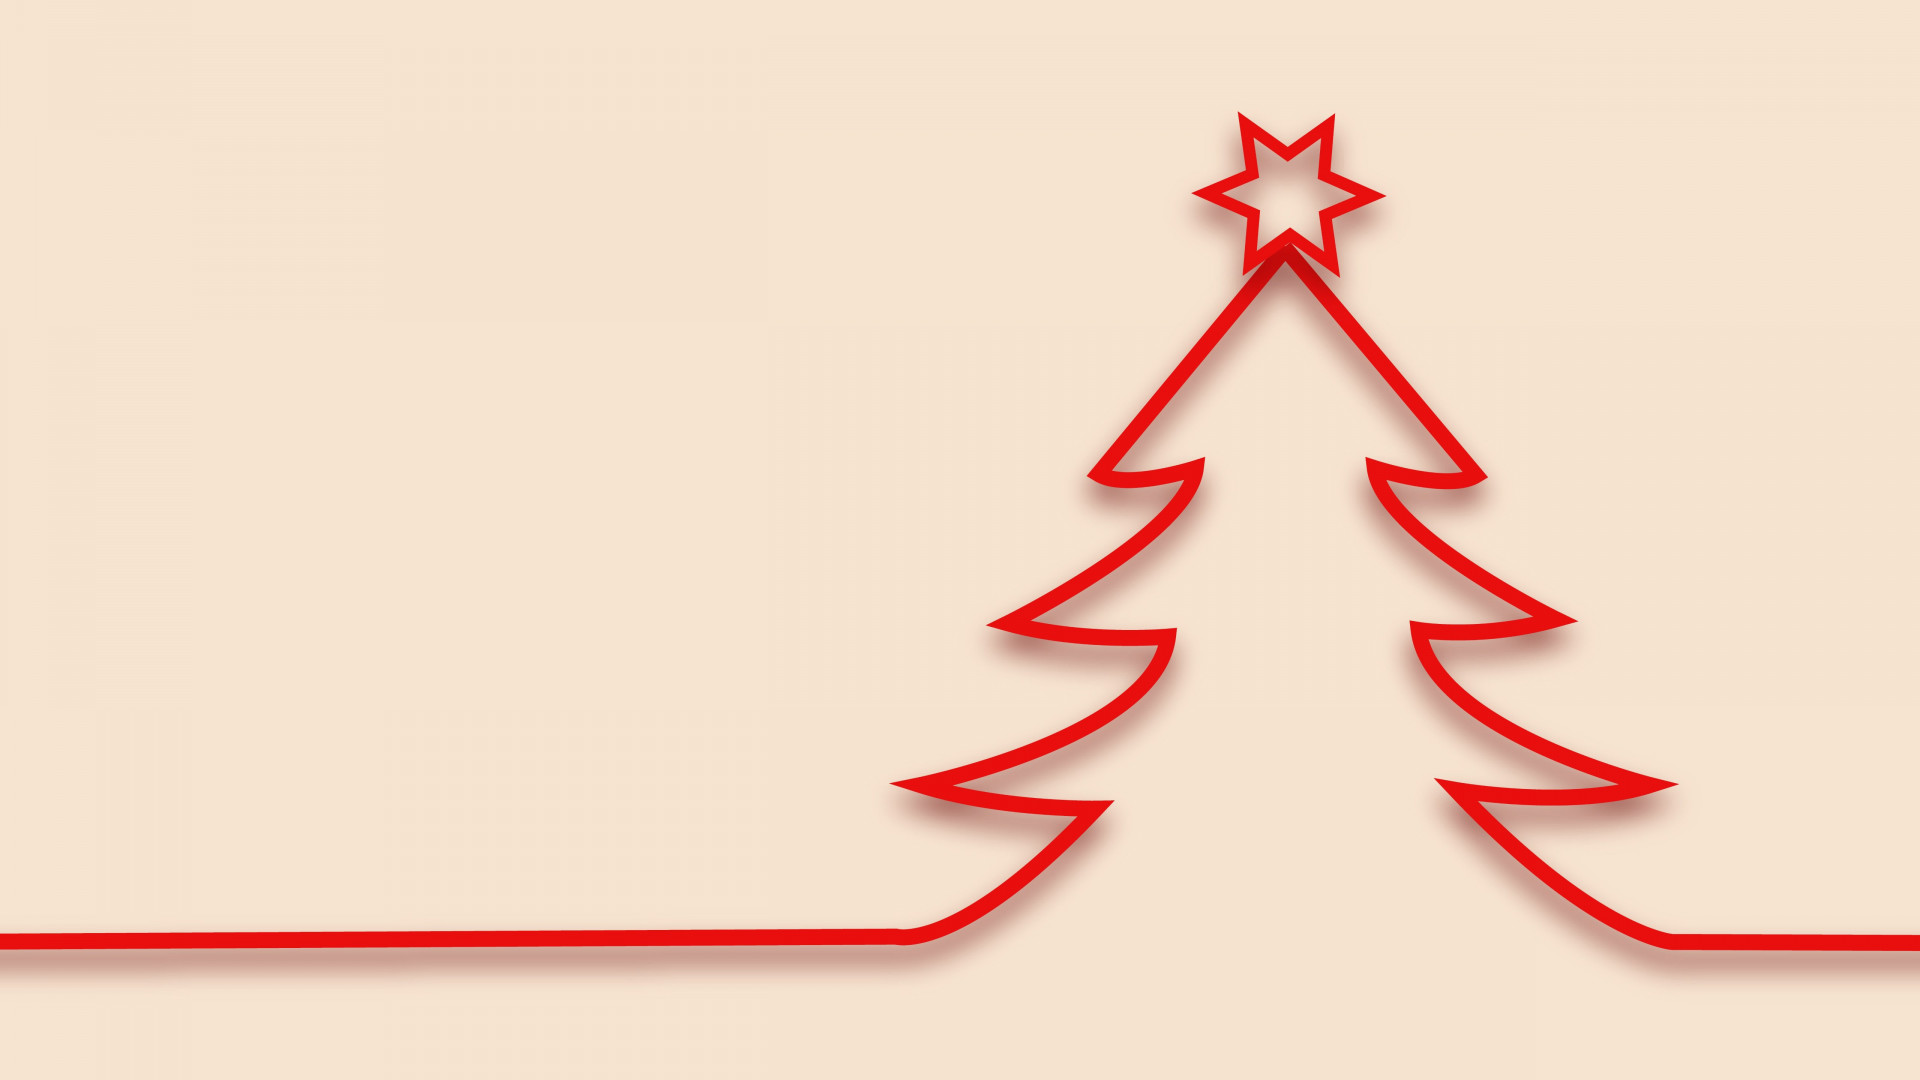 Red minimalistic Christmas tree design wallpaper 1920x1080